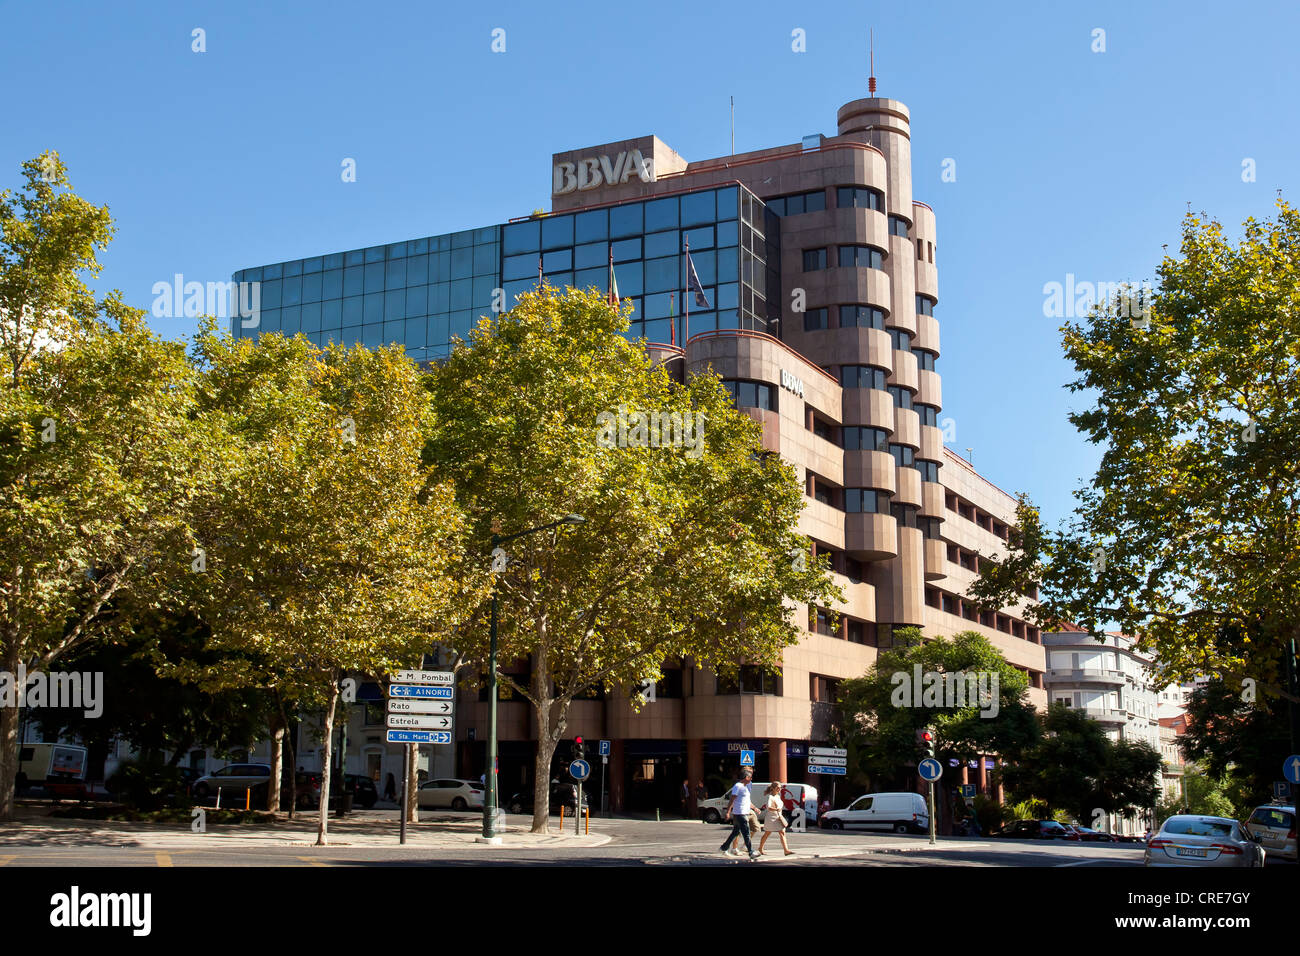 Filiale de la banque espagnole BBVA, Banco Bilbao Vizcaya Argentaria, à Lisbonne, Portugal, Europe Banque D'Images